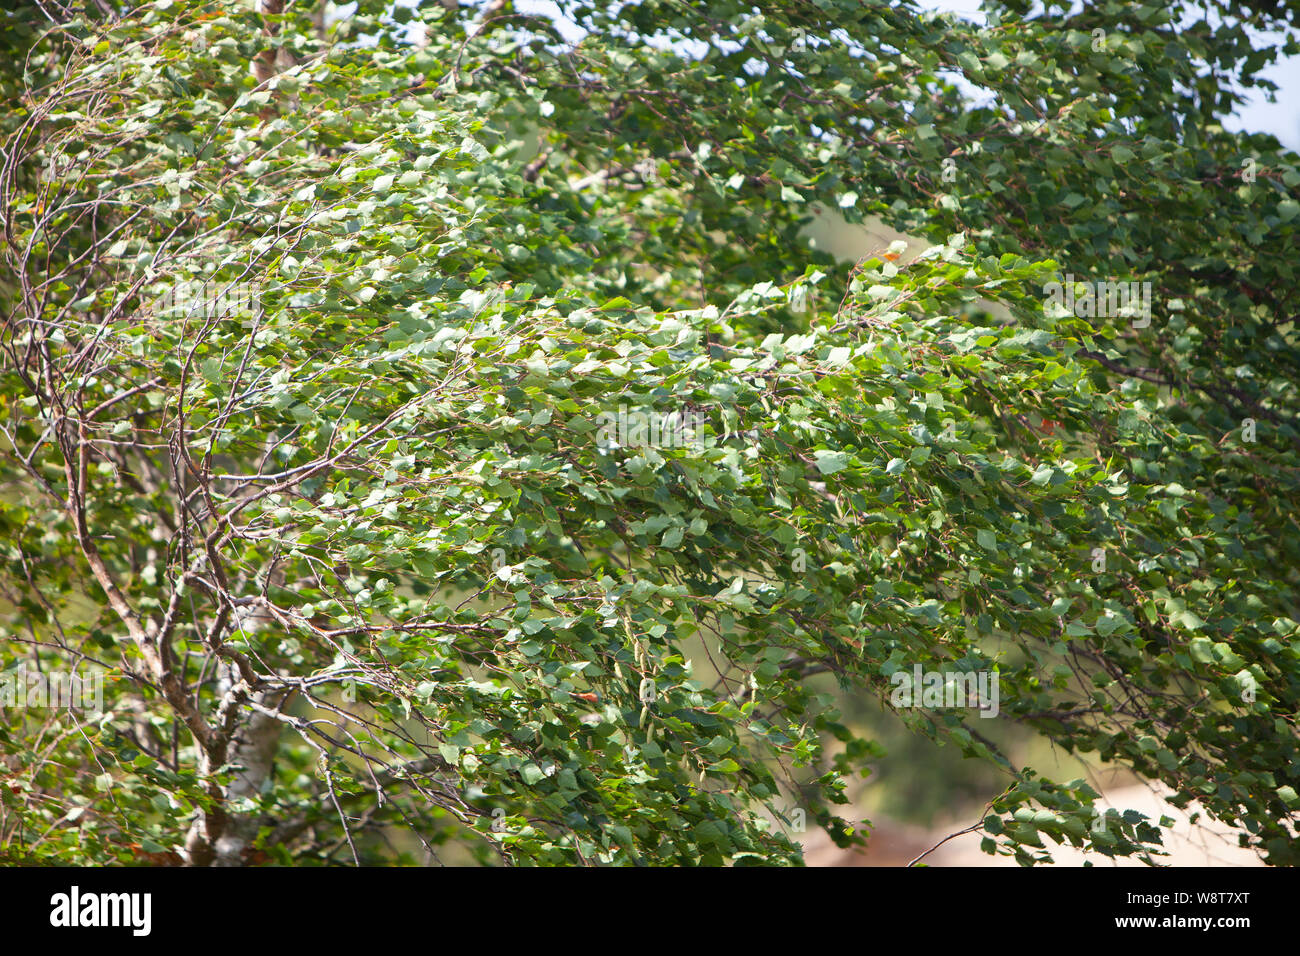 tree populus alba nivea in heavy storm shows light underside of leaves Stock Photo